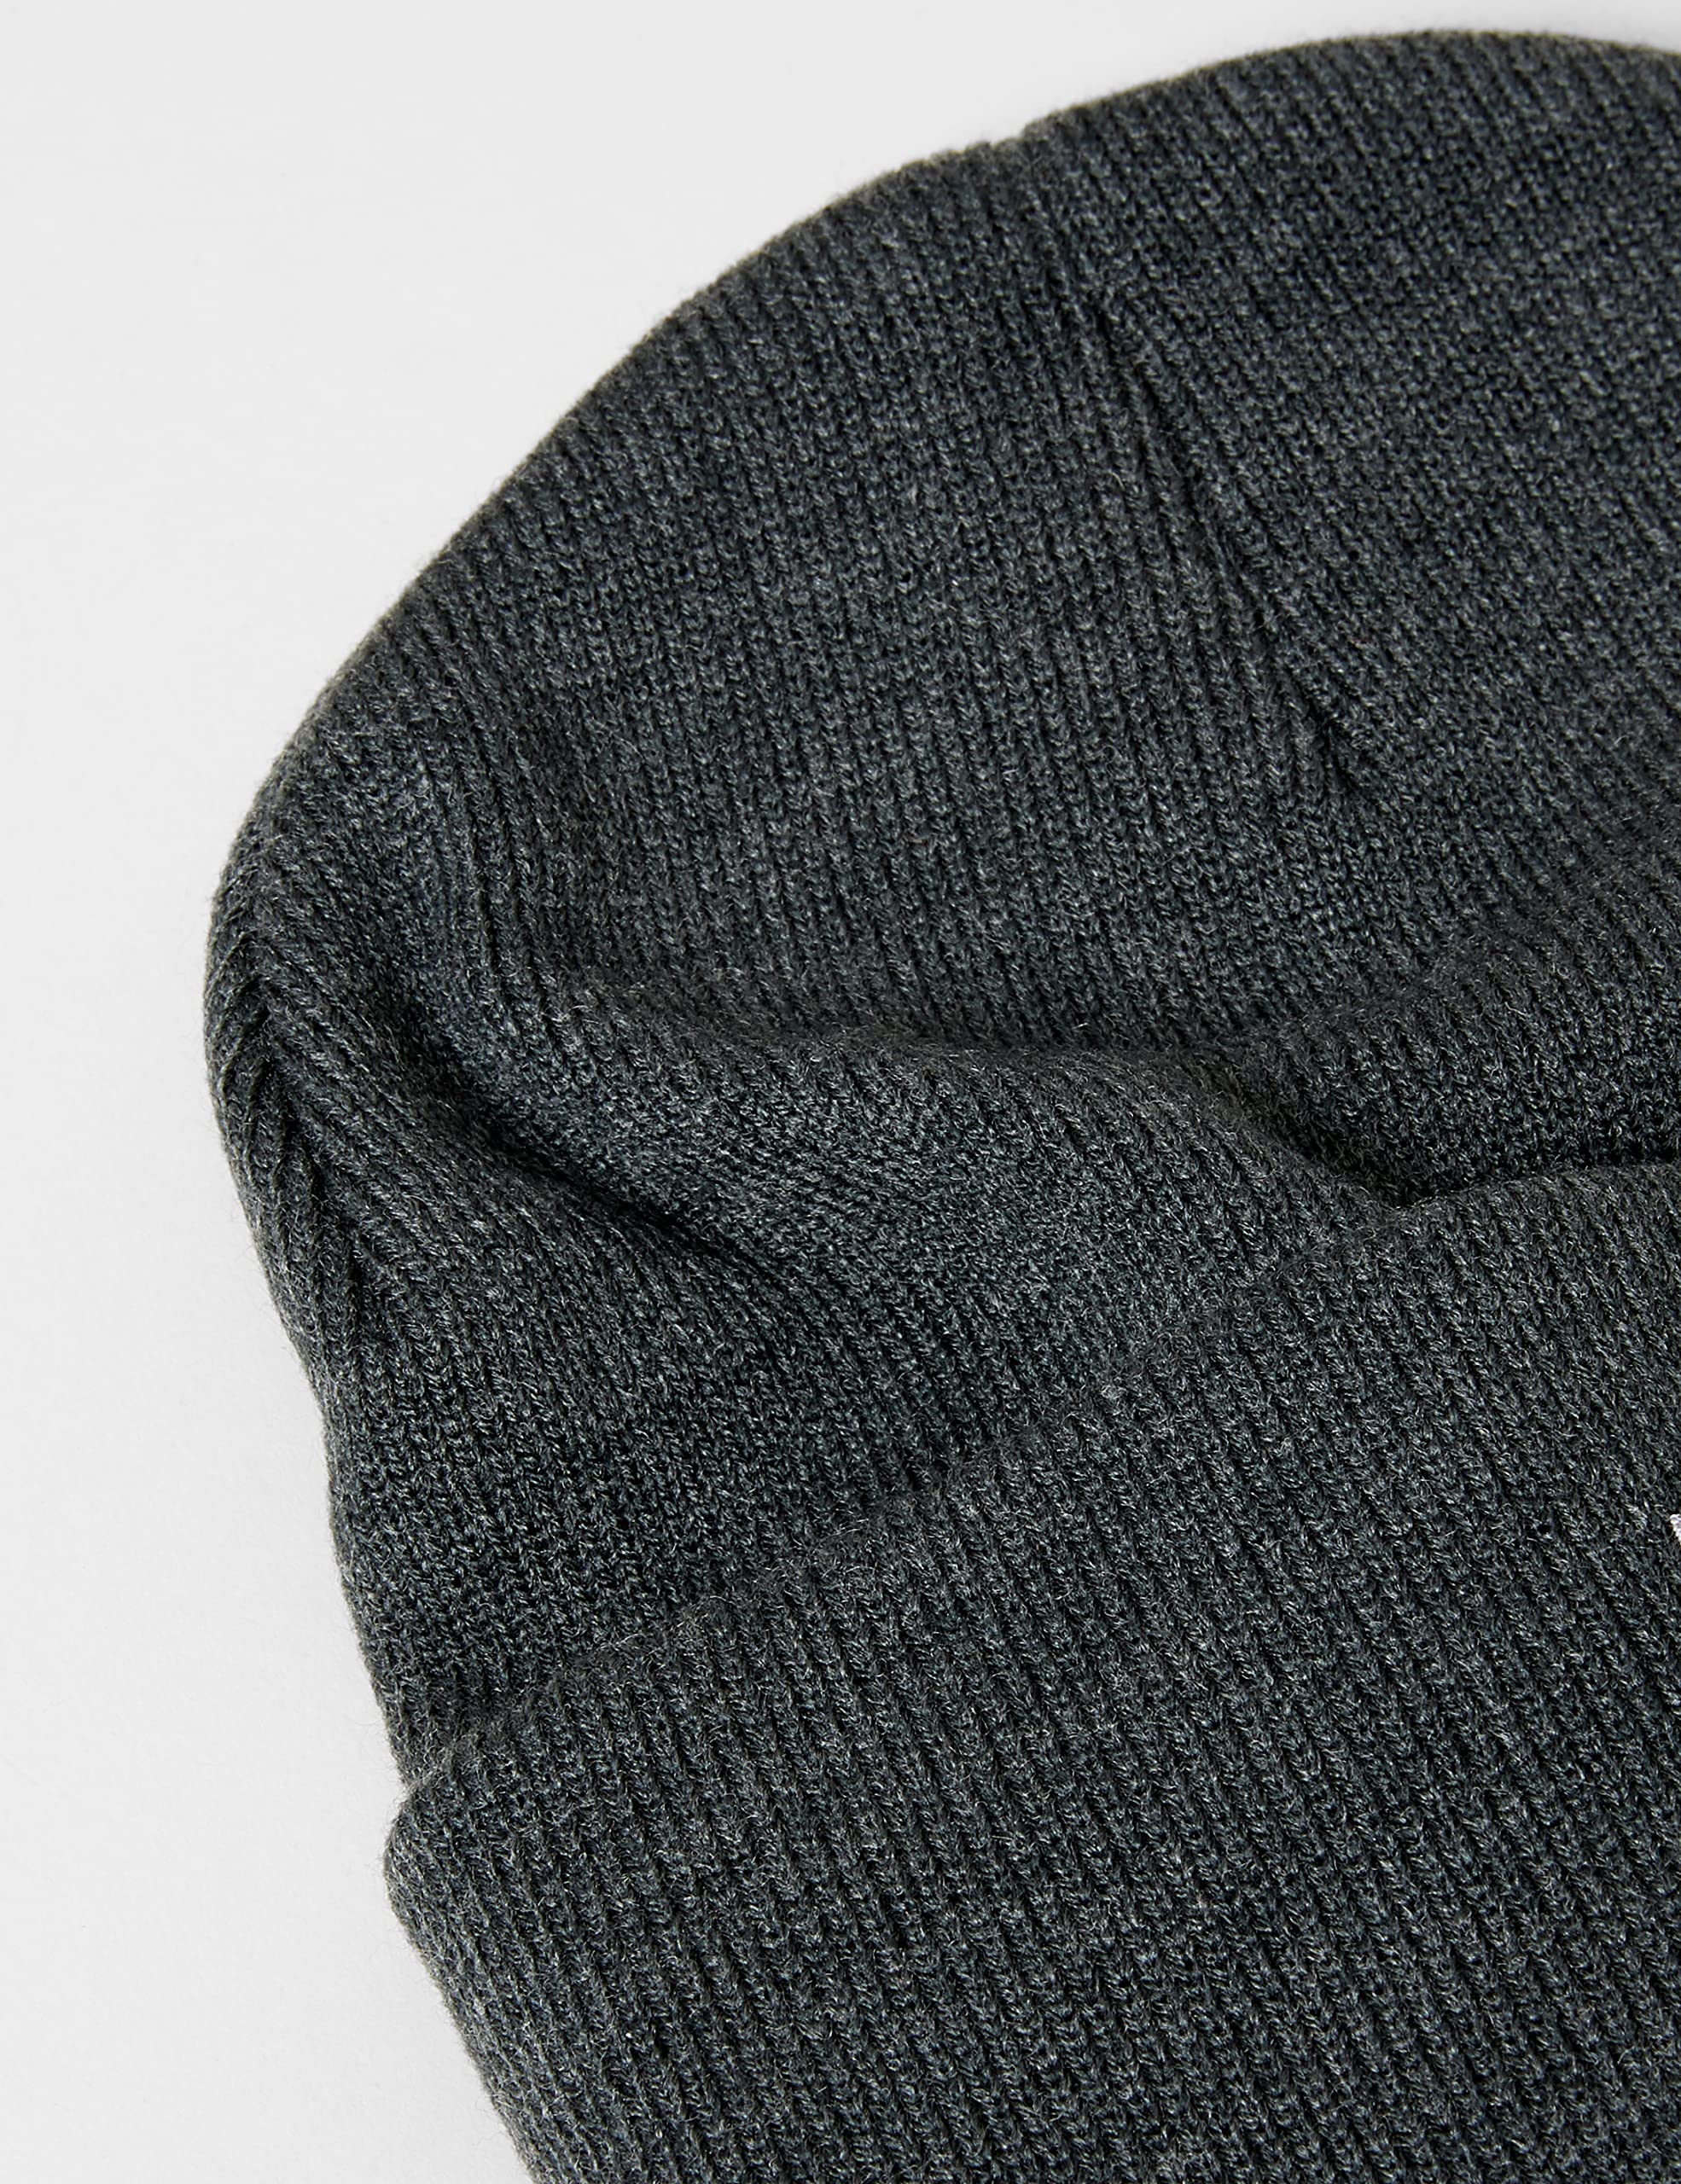 Carhartt Men's Knit Cuffed Beanie